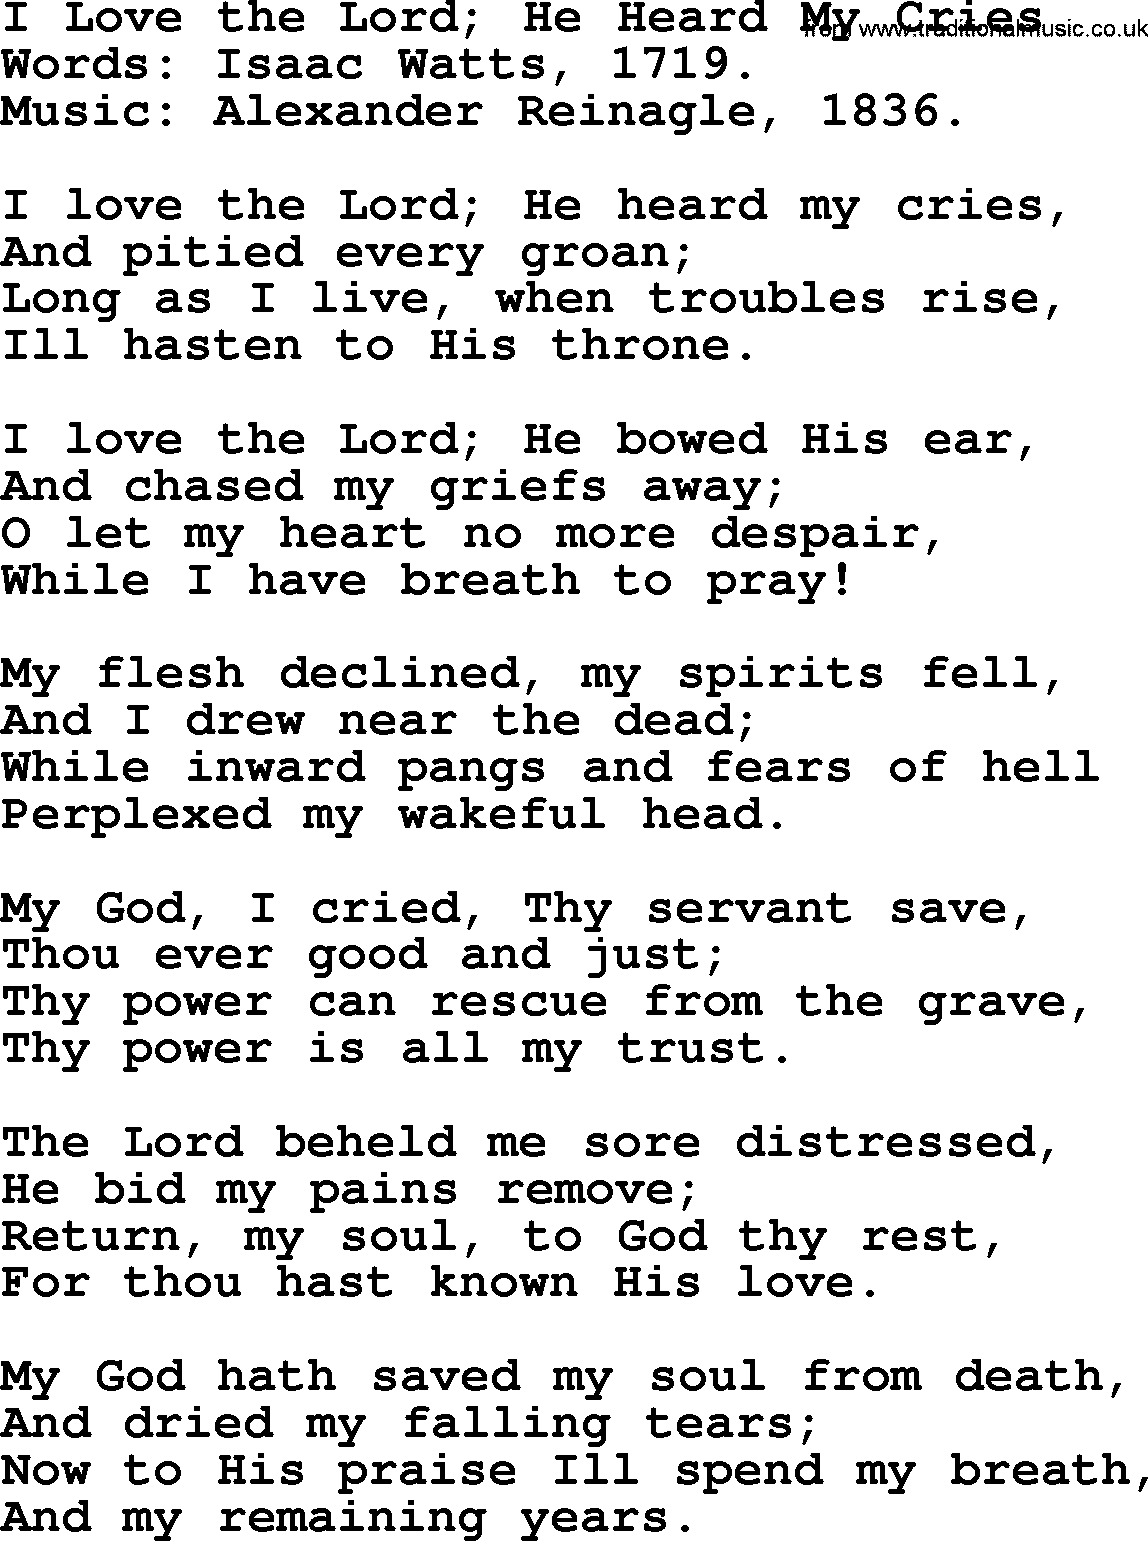 Isaac Watts Christian hymn: I Love the Lord; He Heard My Cries- lyricss